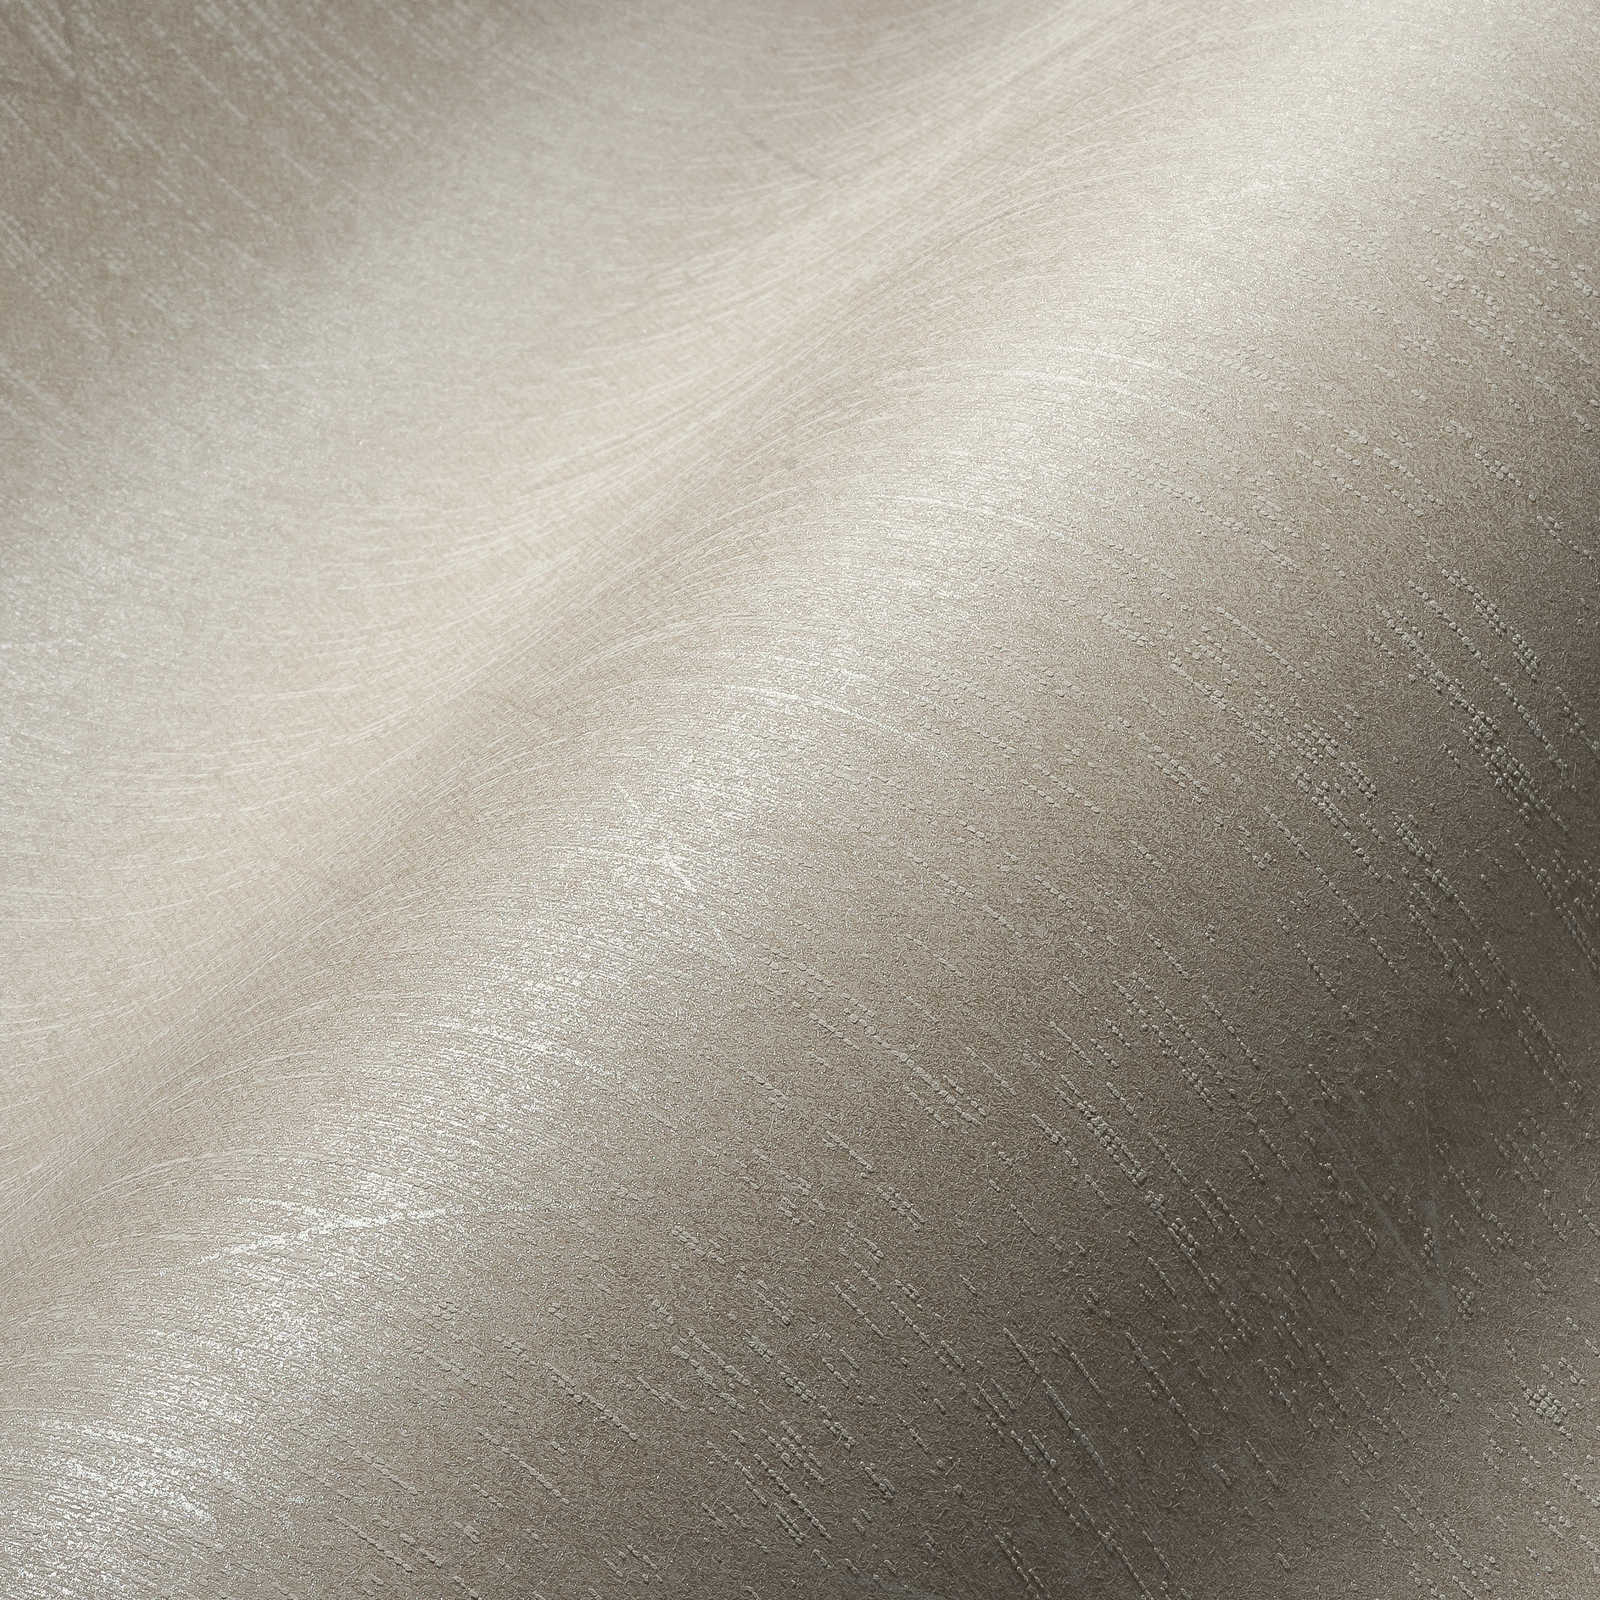             Hellgraue Textiloptik Tapete mit Glanz-Muster im Retro Stil – Grau
        